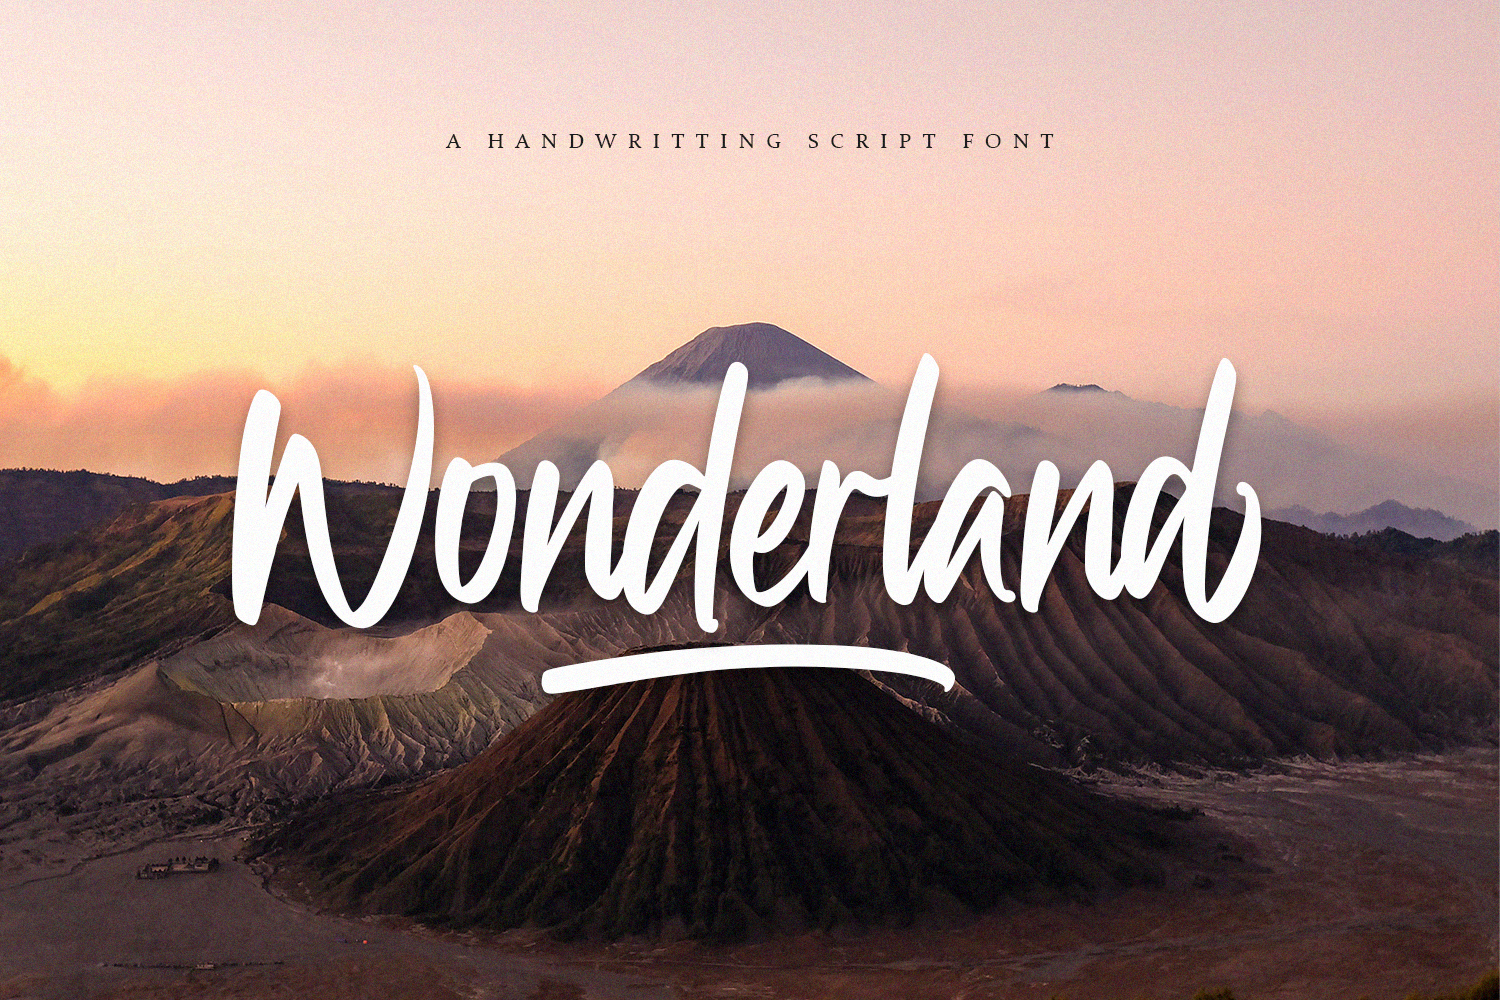 Wonderland Free Font